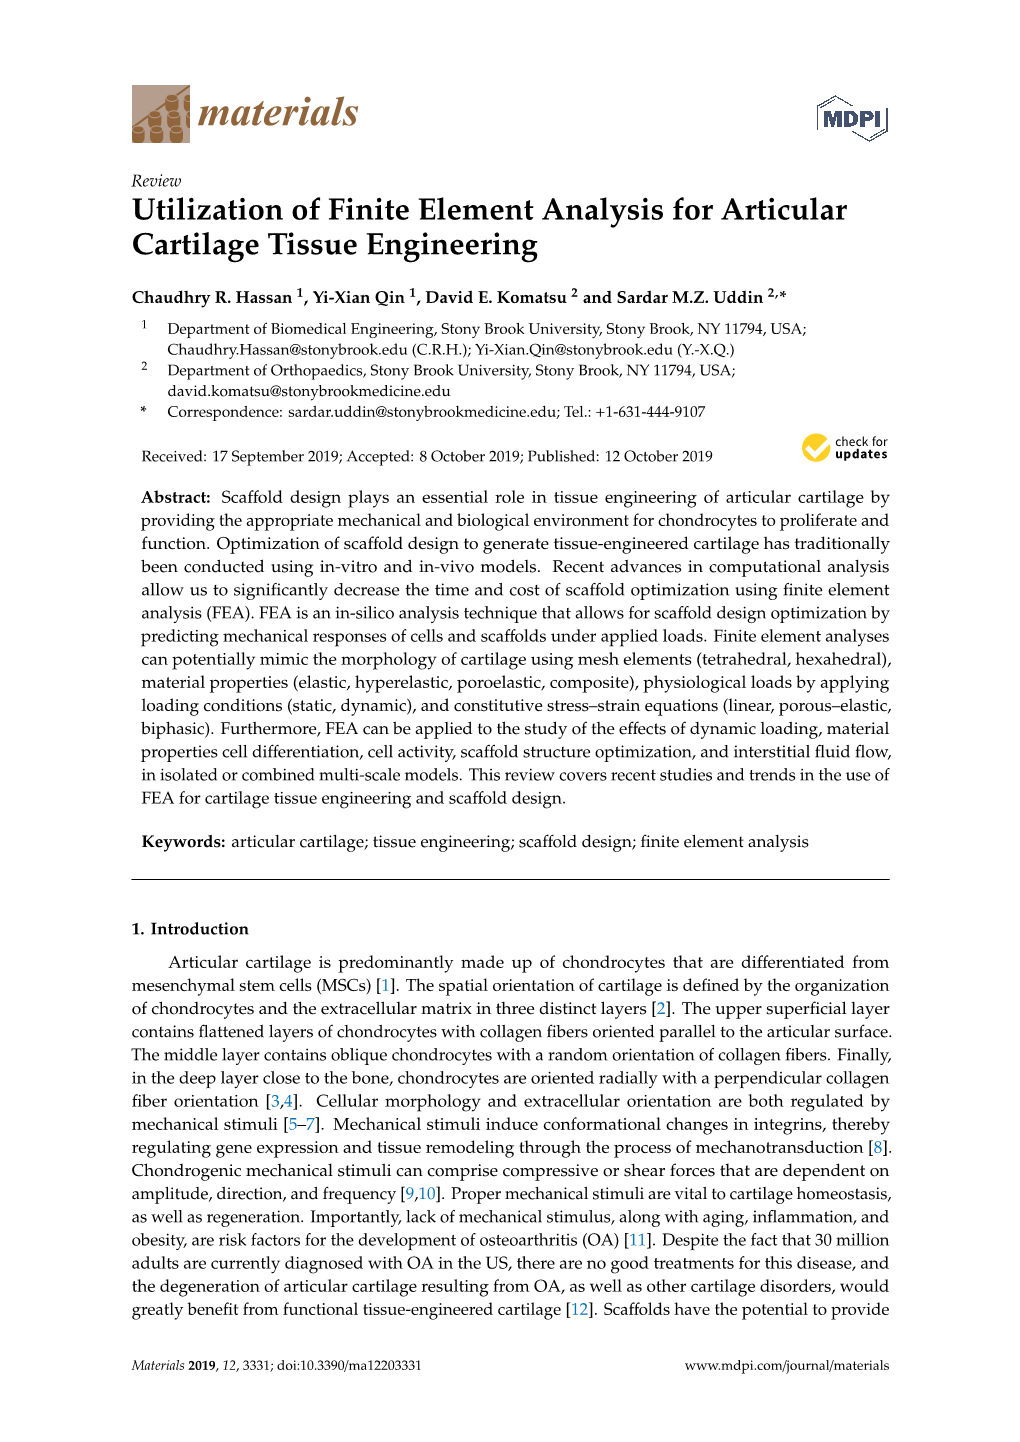 Utilization of Finite Element Analysis for Articular Cartilage Tissue Engineering